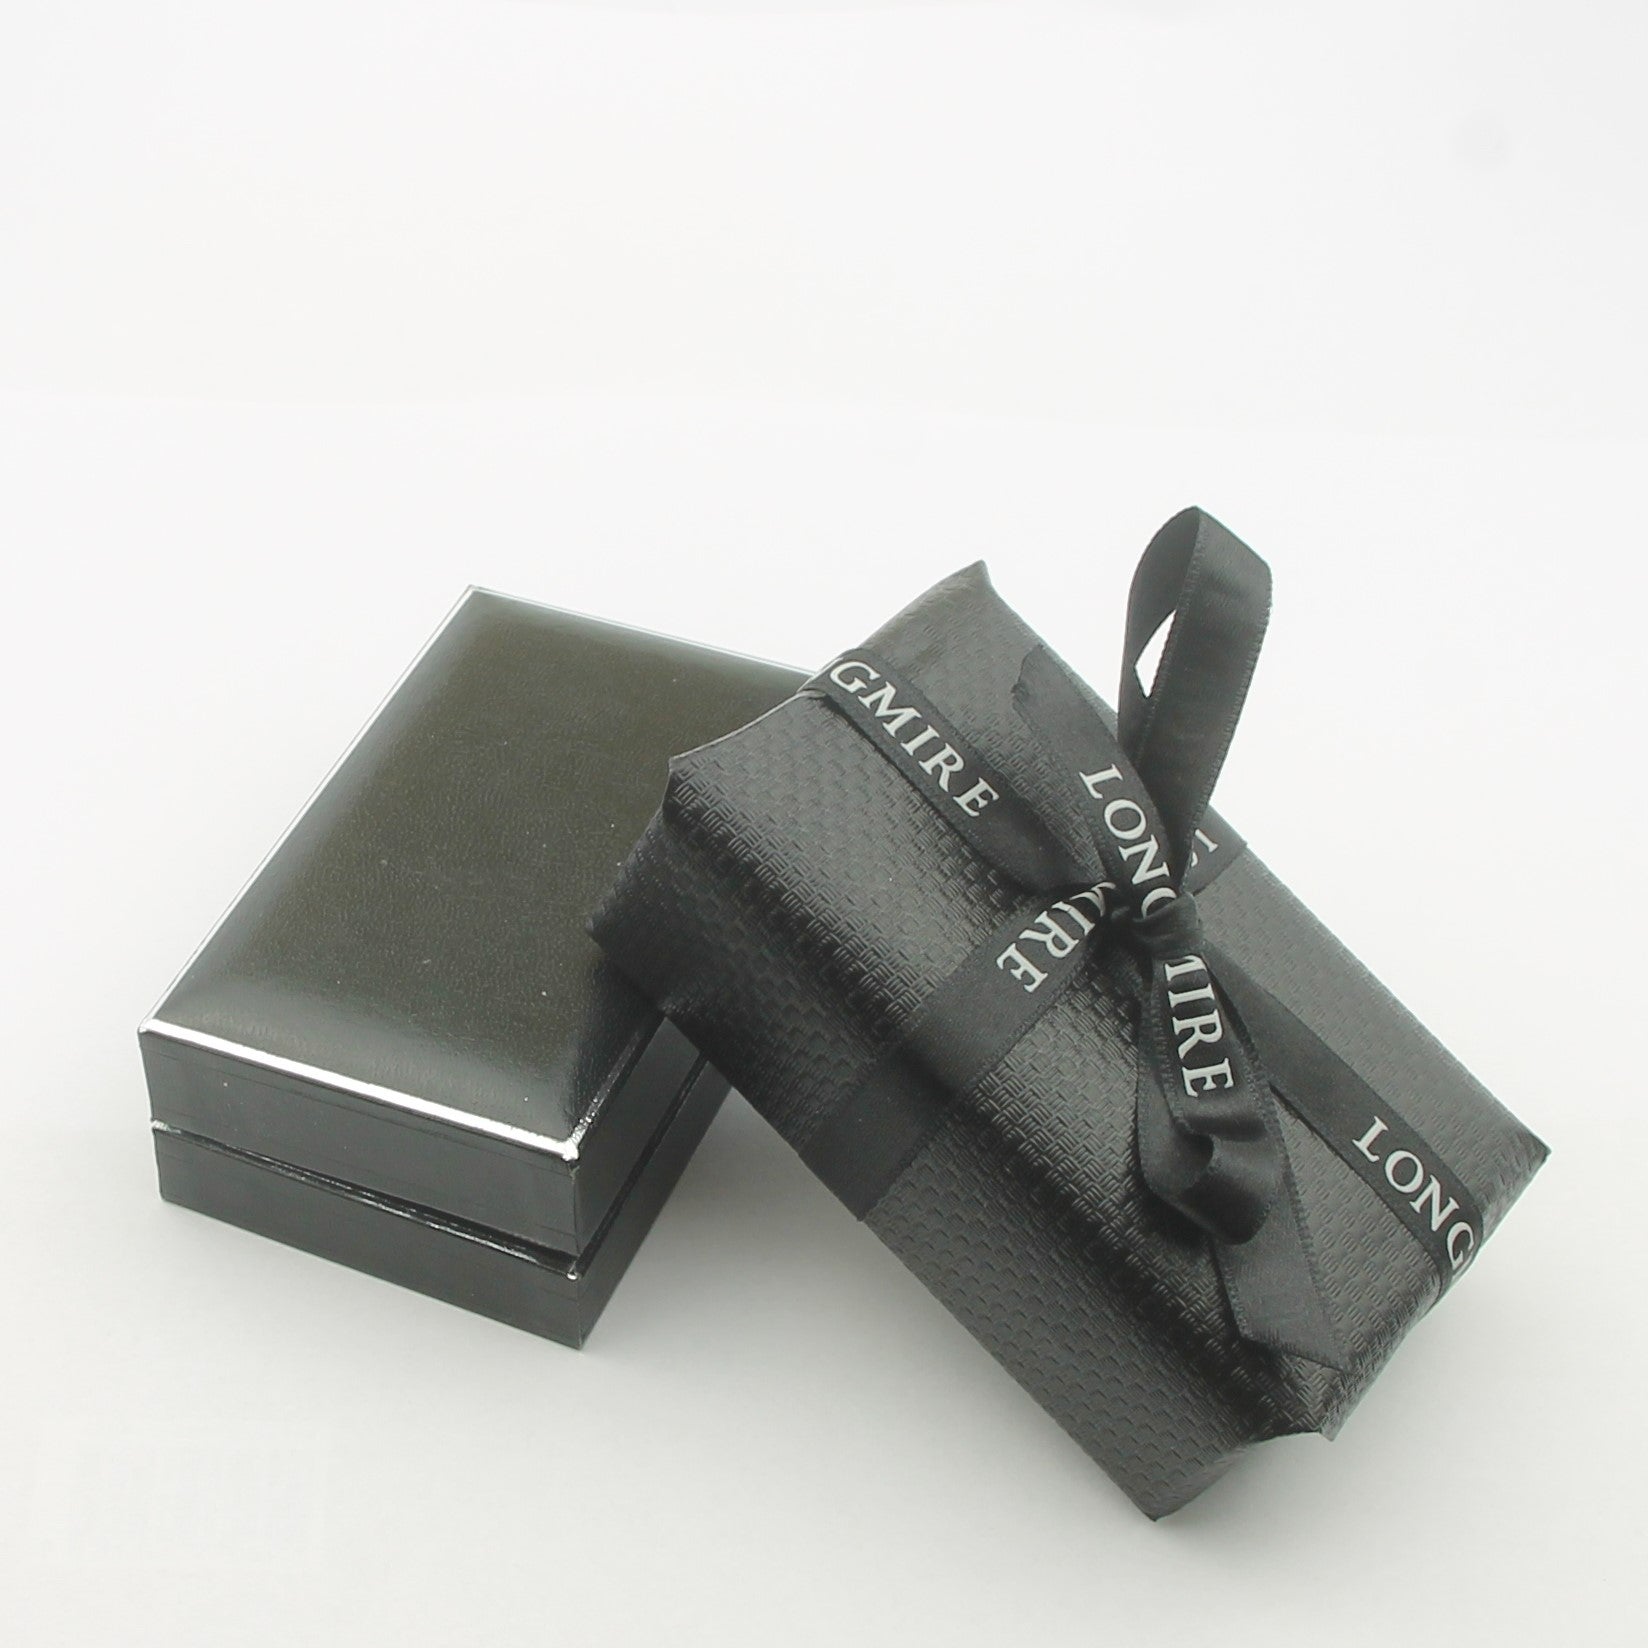 Longmire cufflinks in gift box - gift wrapped 